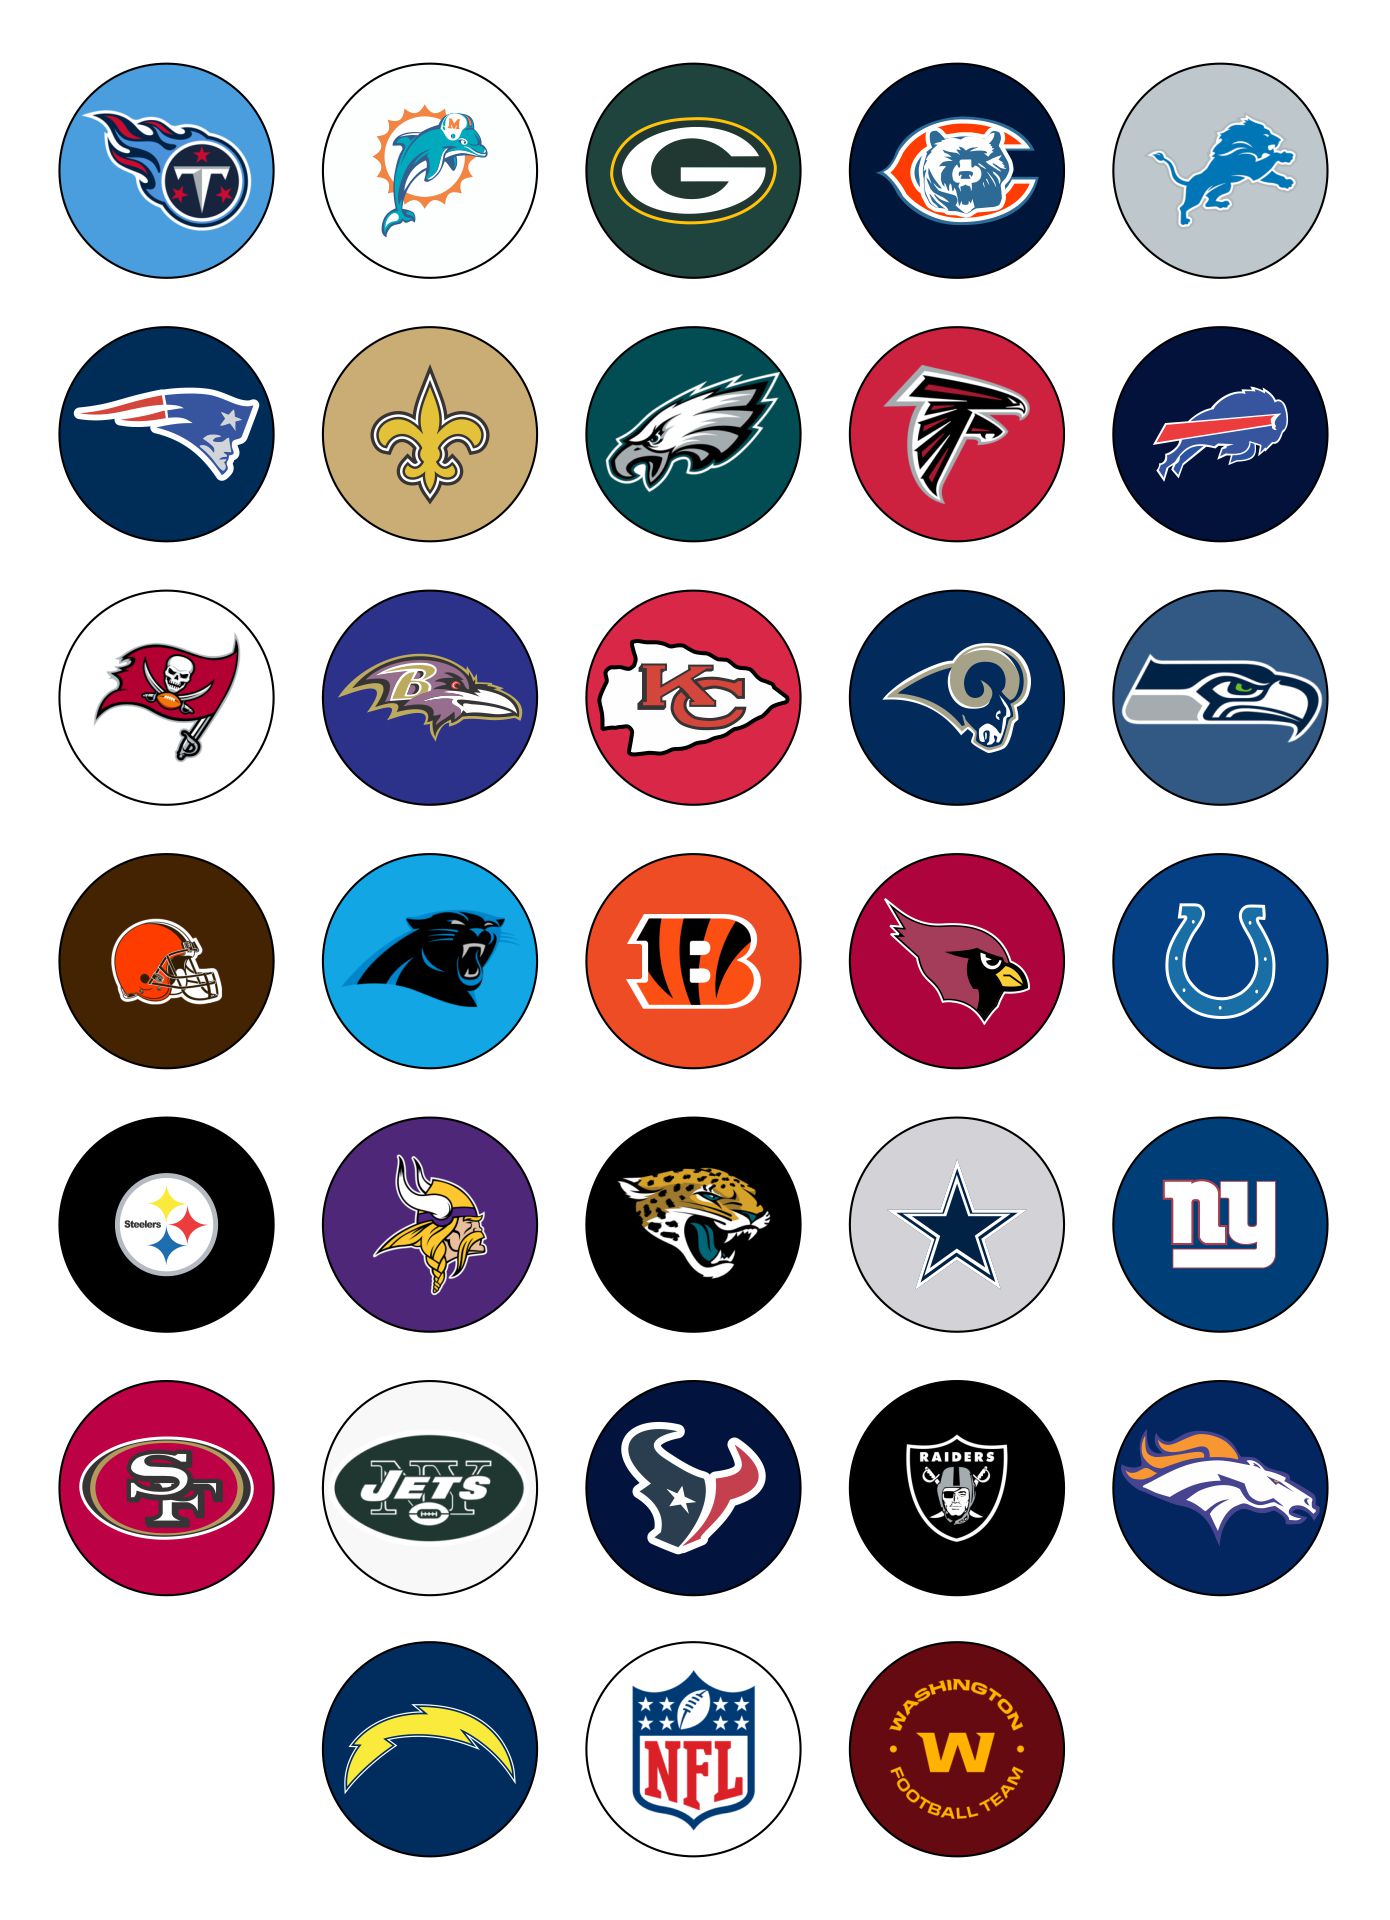 7 Best Images of NFL Football Logos Printable - NFL Football Team Logo ...